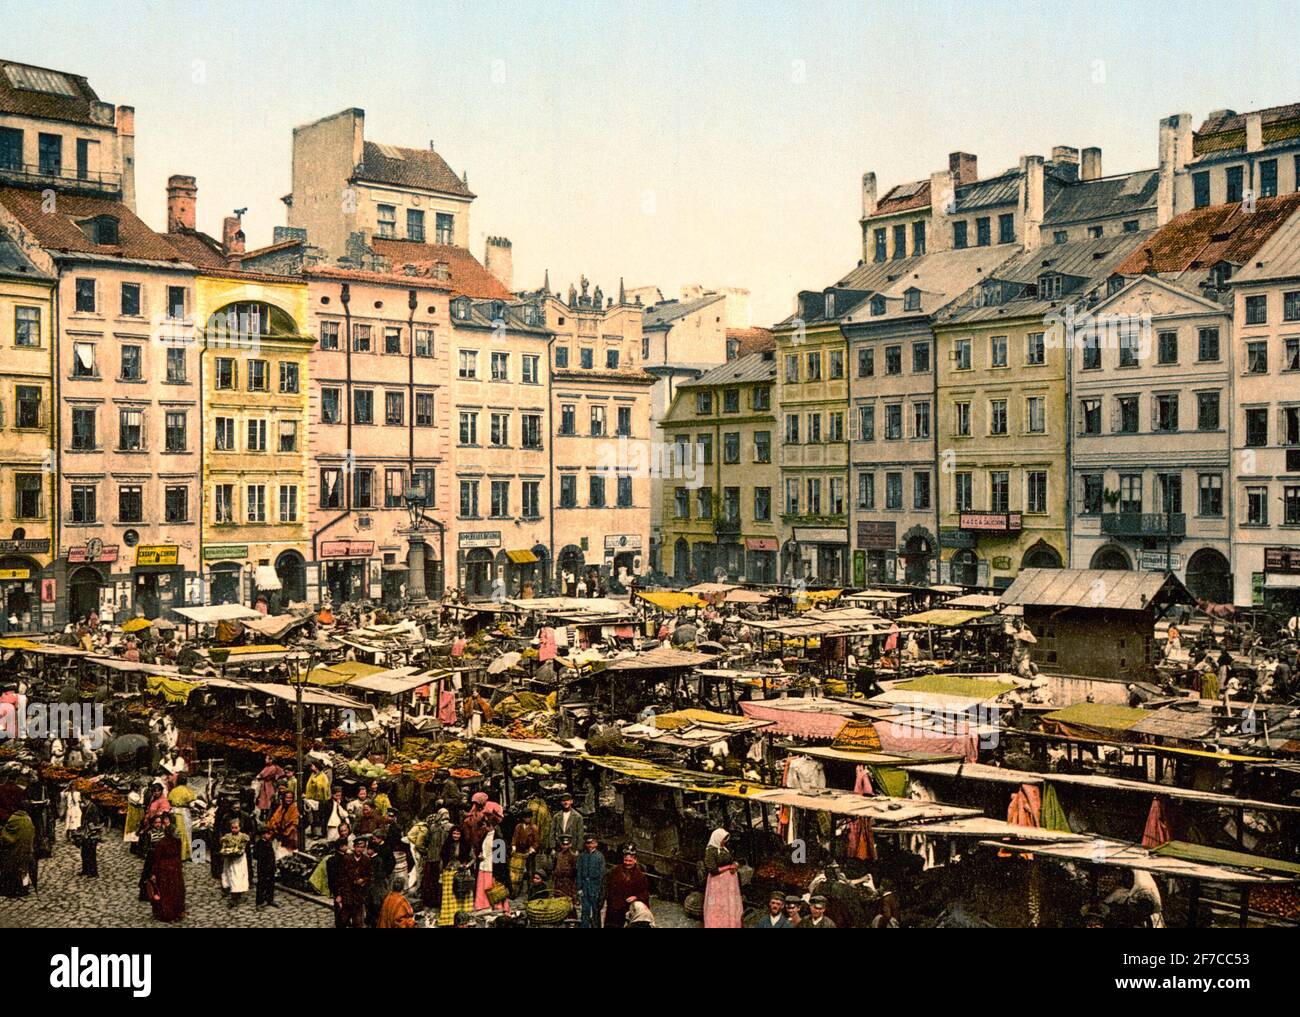 Old part of town, Warsaw, Russia i.e. Warsaw, Poland, circa 1900 Stock Photo